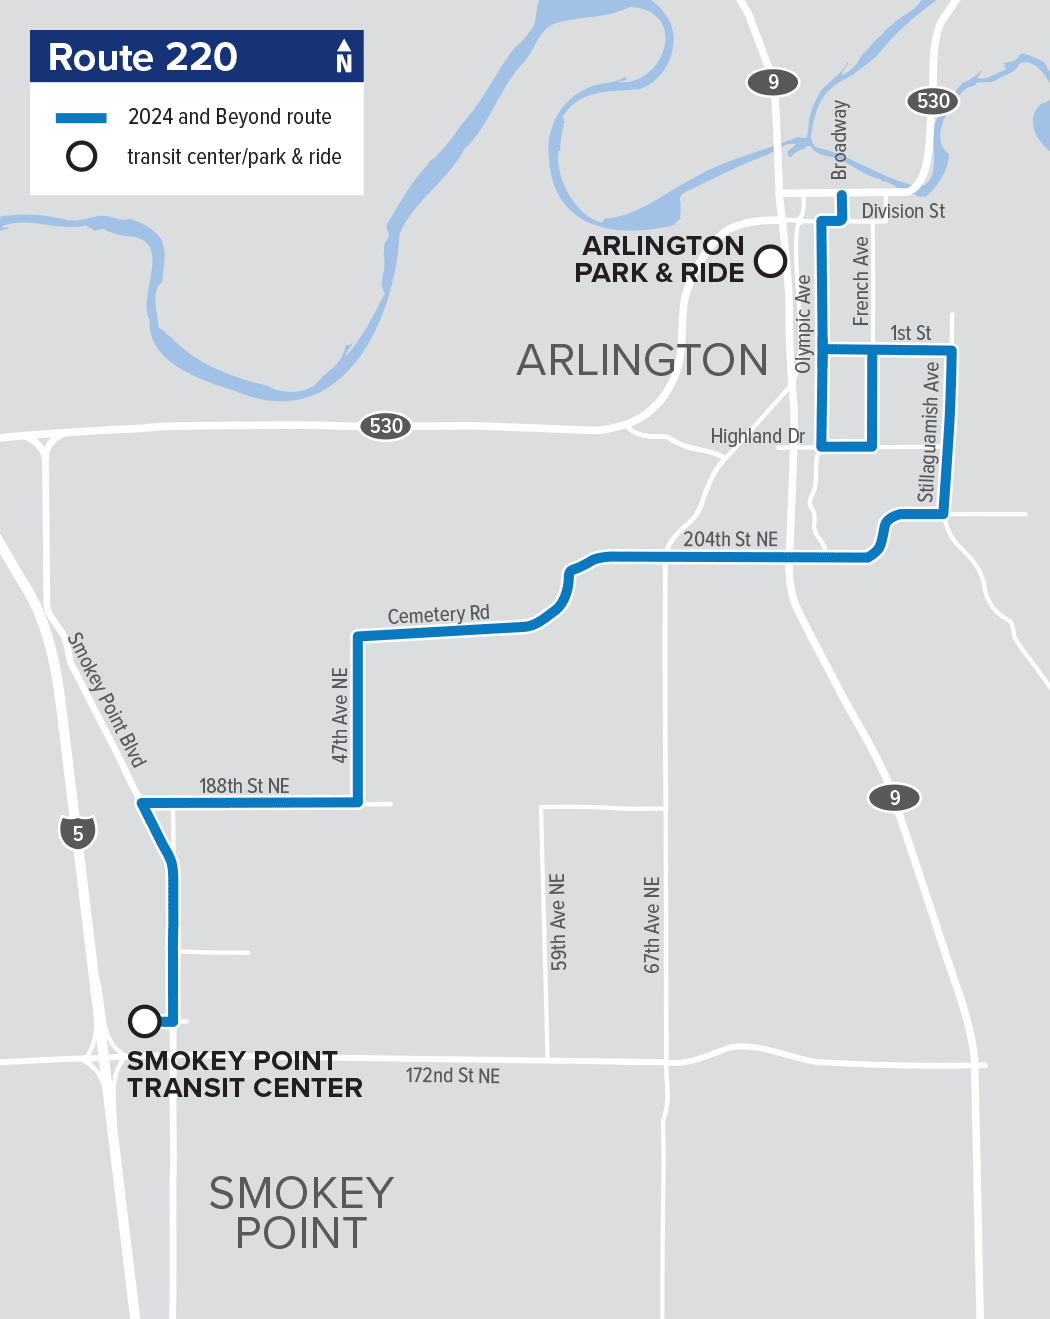 Route 220: Arlington – Smokey Point (no changes)